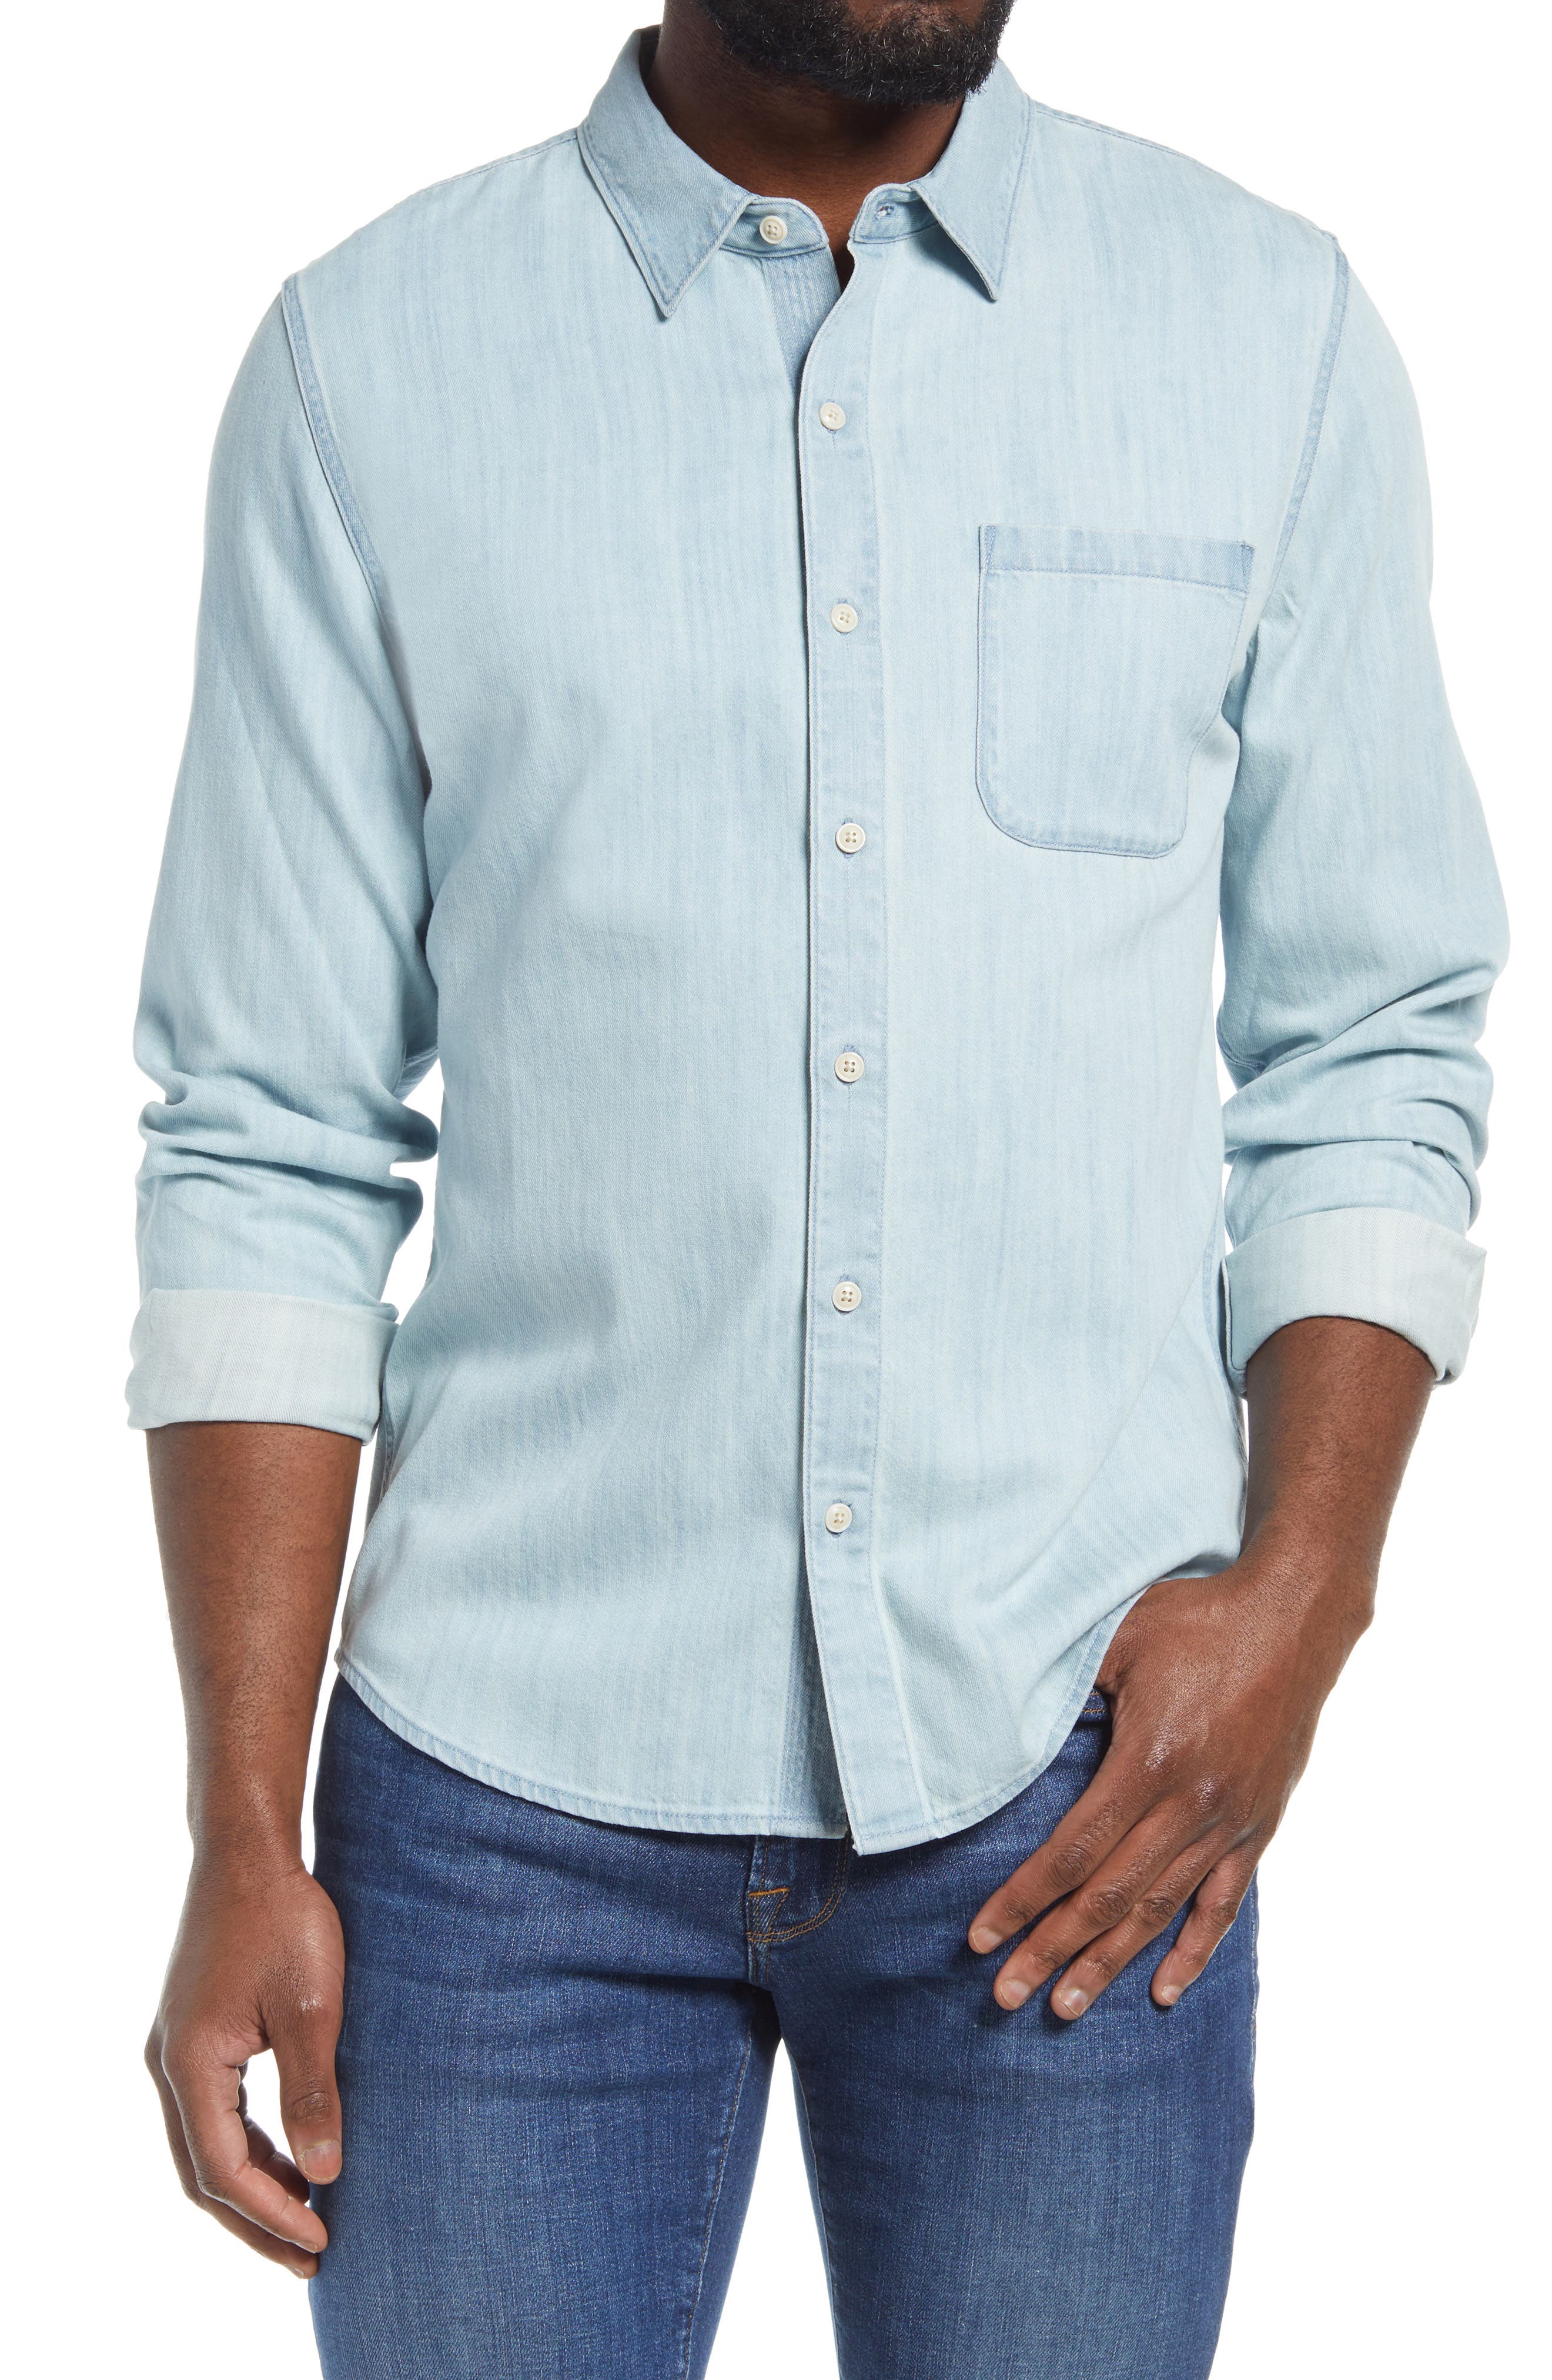 FRAME Slim Fit Denim Button-Up Shirt in Light Wash at Nordstrom, Size X-Large